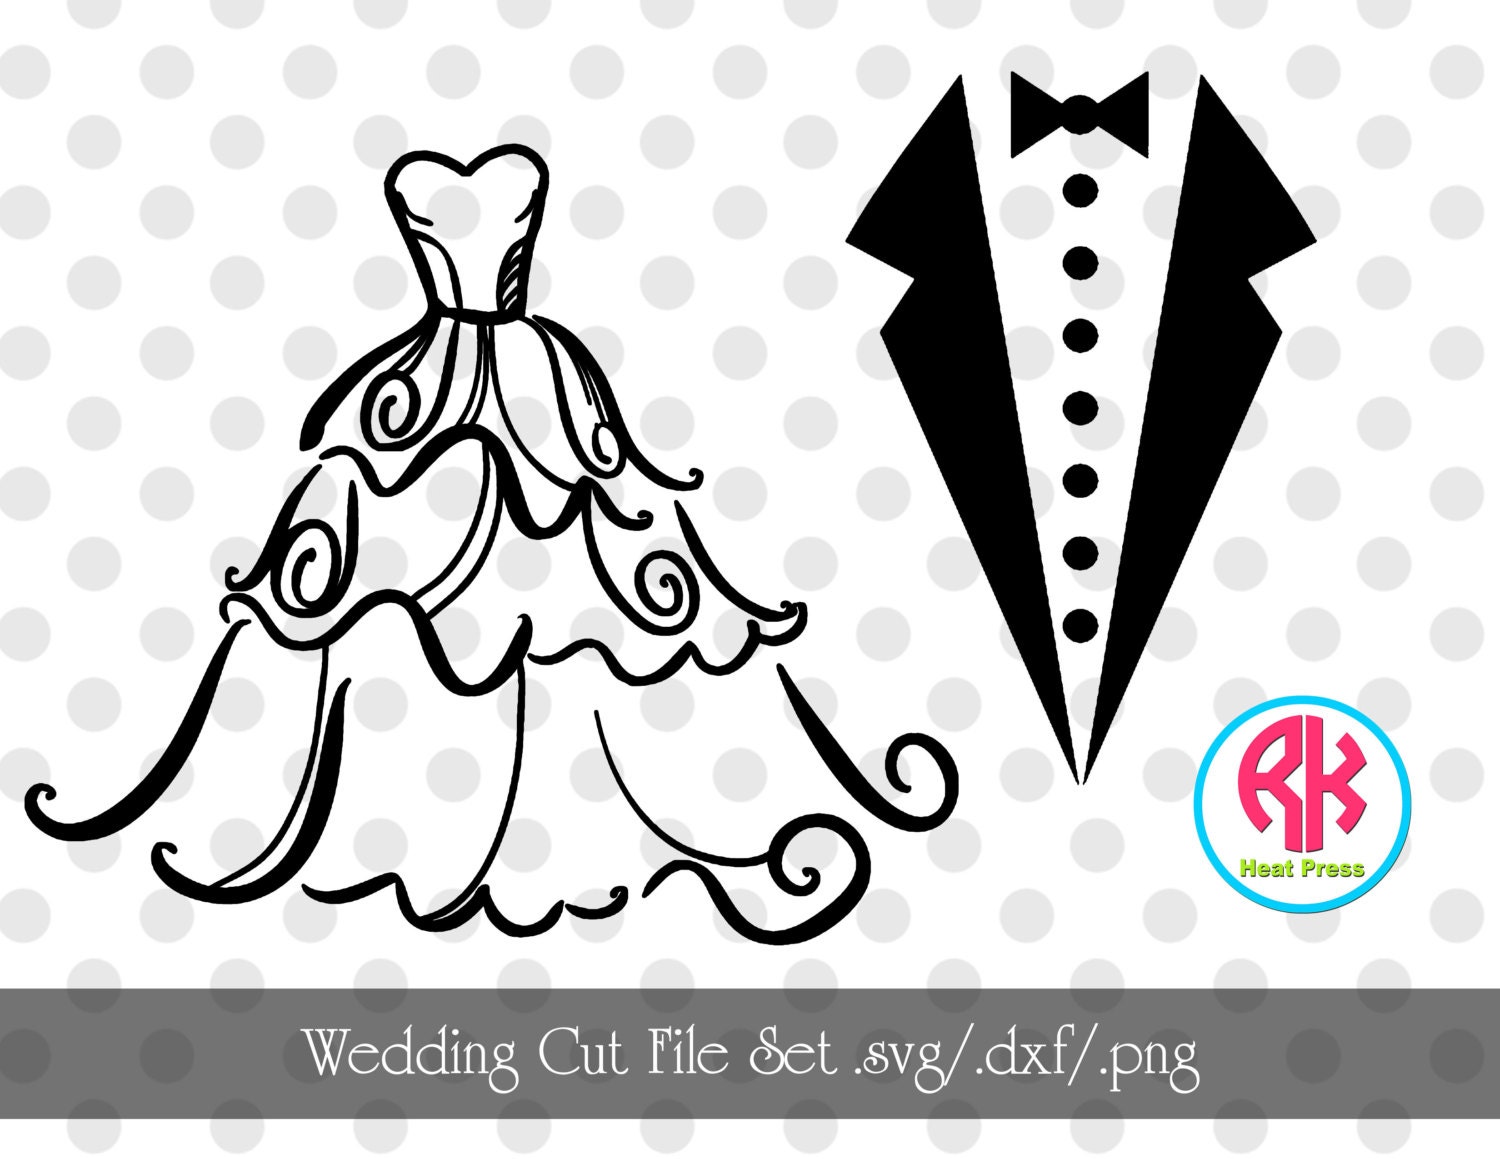 Download Wedding Cut Files Set .PNG .DXF .SVG